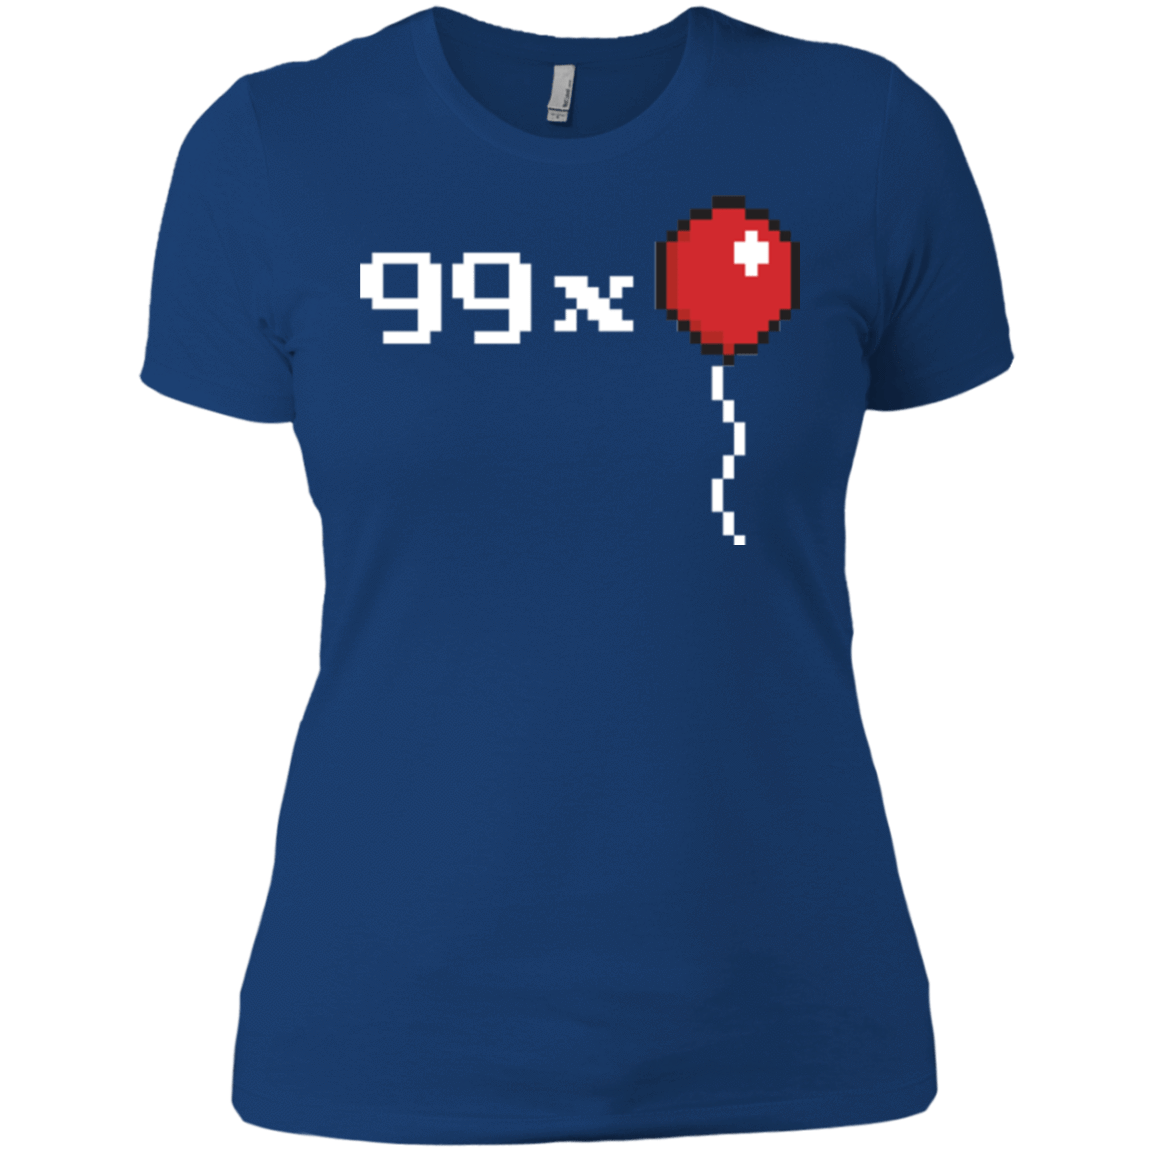 T-Shirts Royal / X-Small 99x Balloon Women's Premium T-Shirt